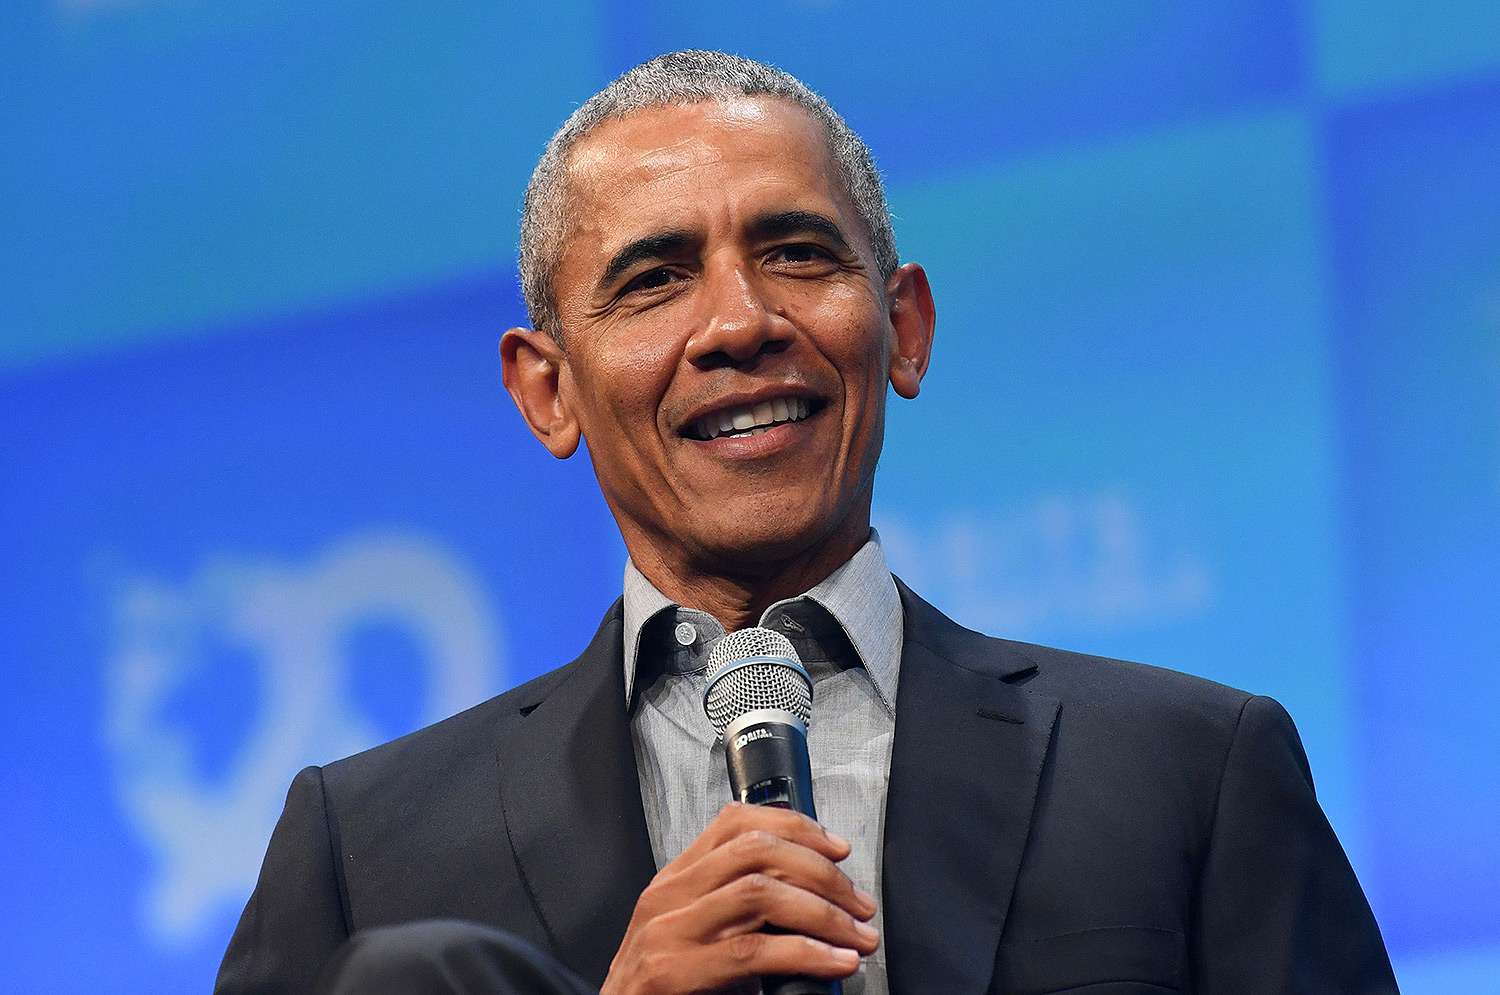 Barack Obama Says 'Let's Be Safe and Smart' Amid Pandemic | PEOPLE.com